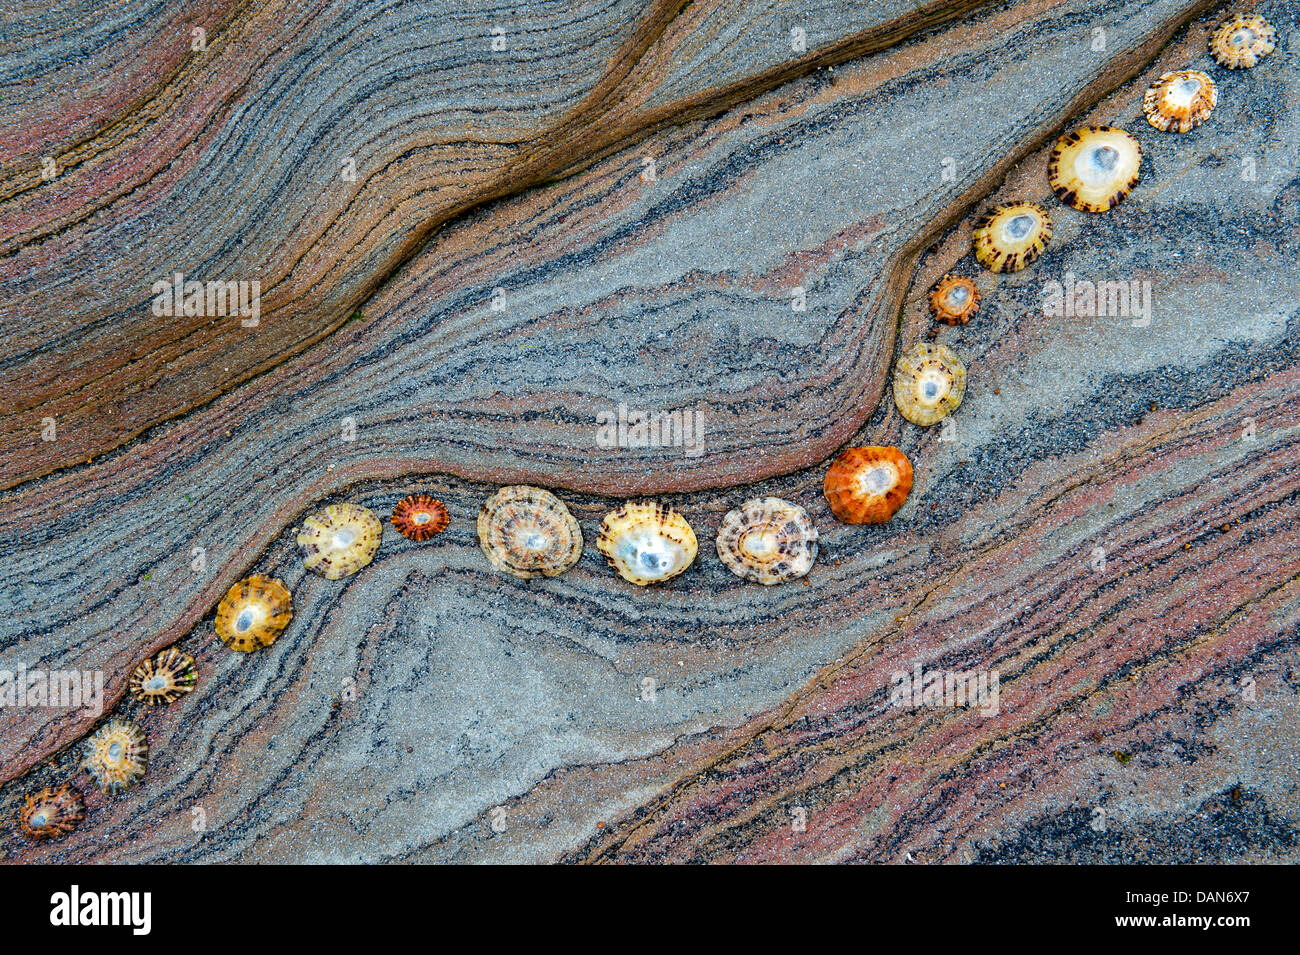 Limpet shells on sandstone rock strata pattern. Northumberland Coastline, England Stock Photo